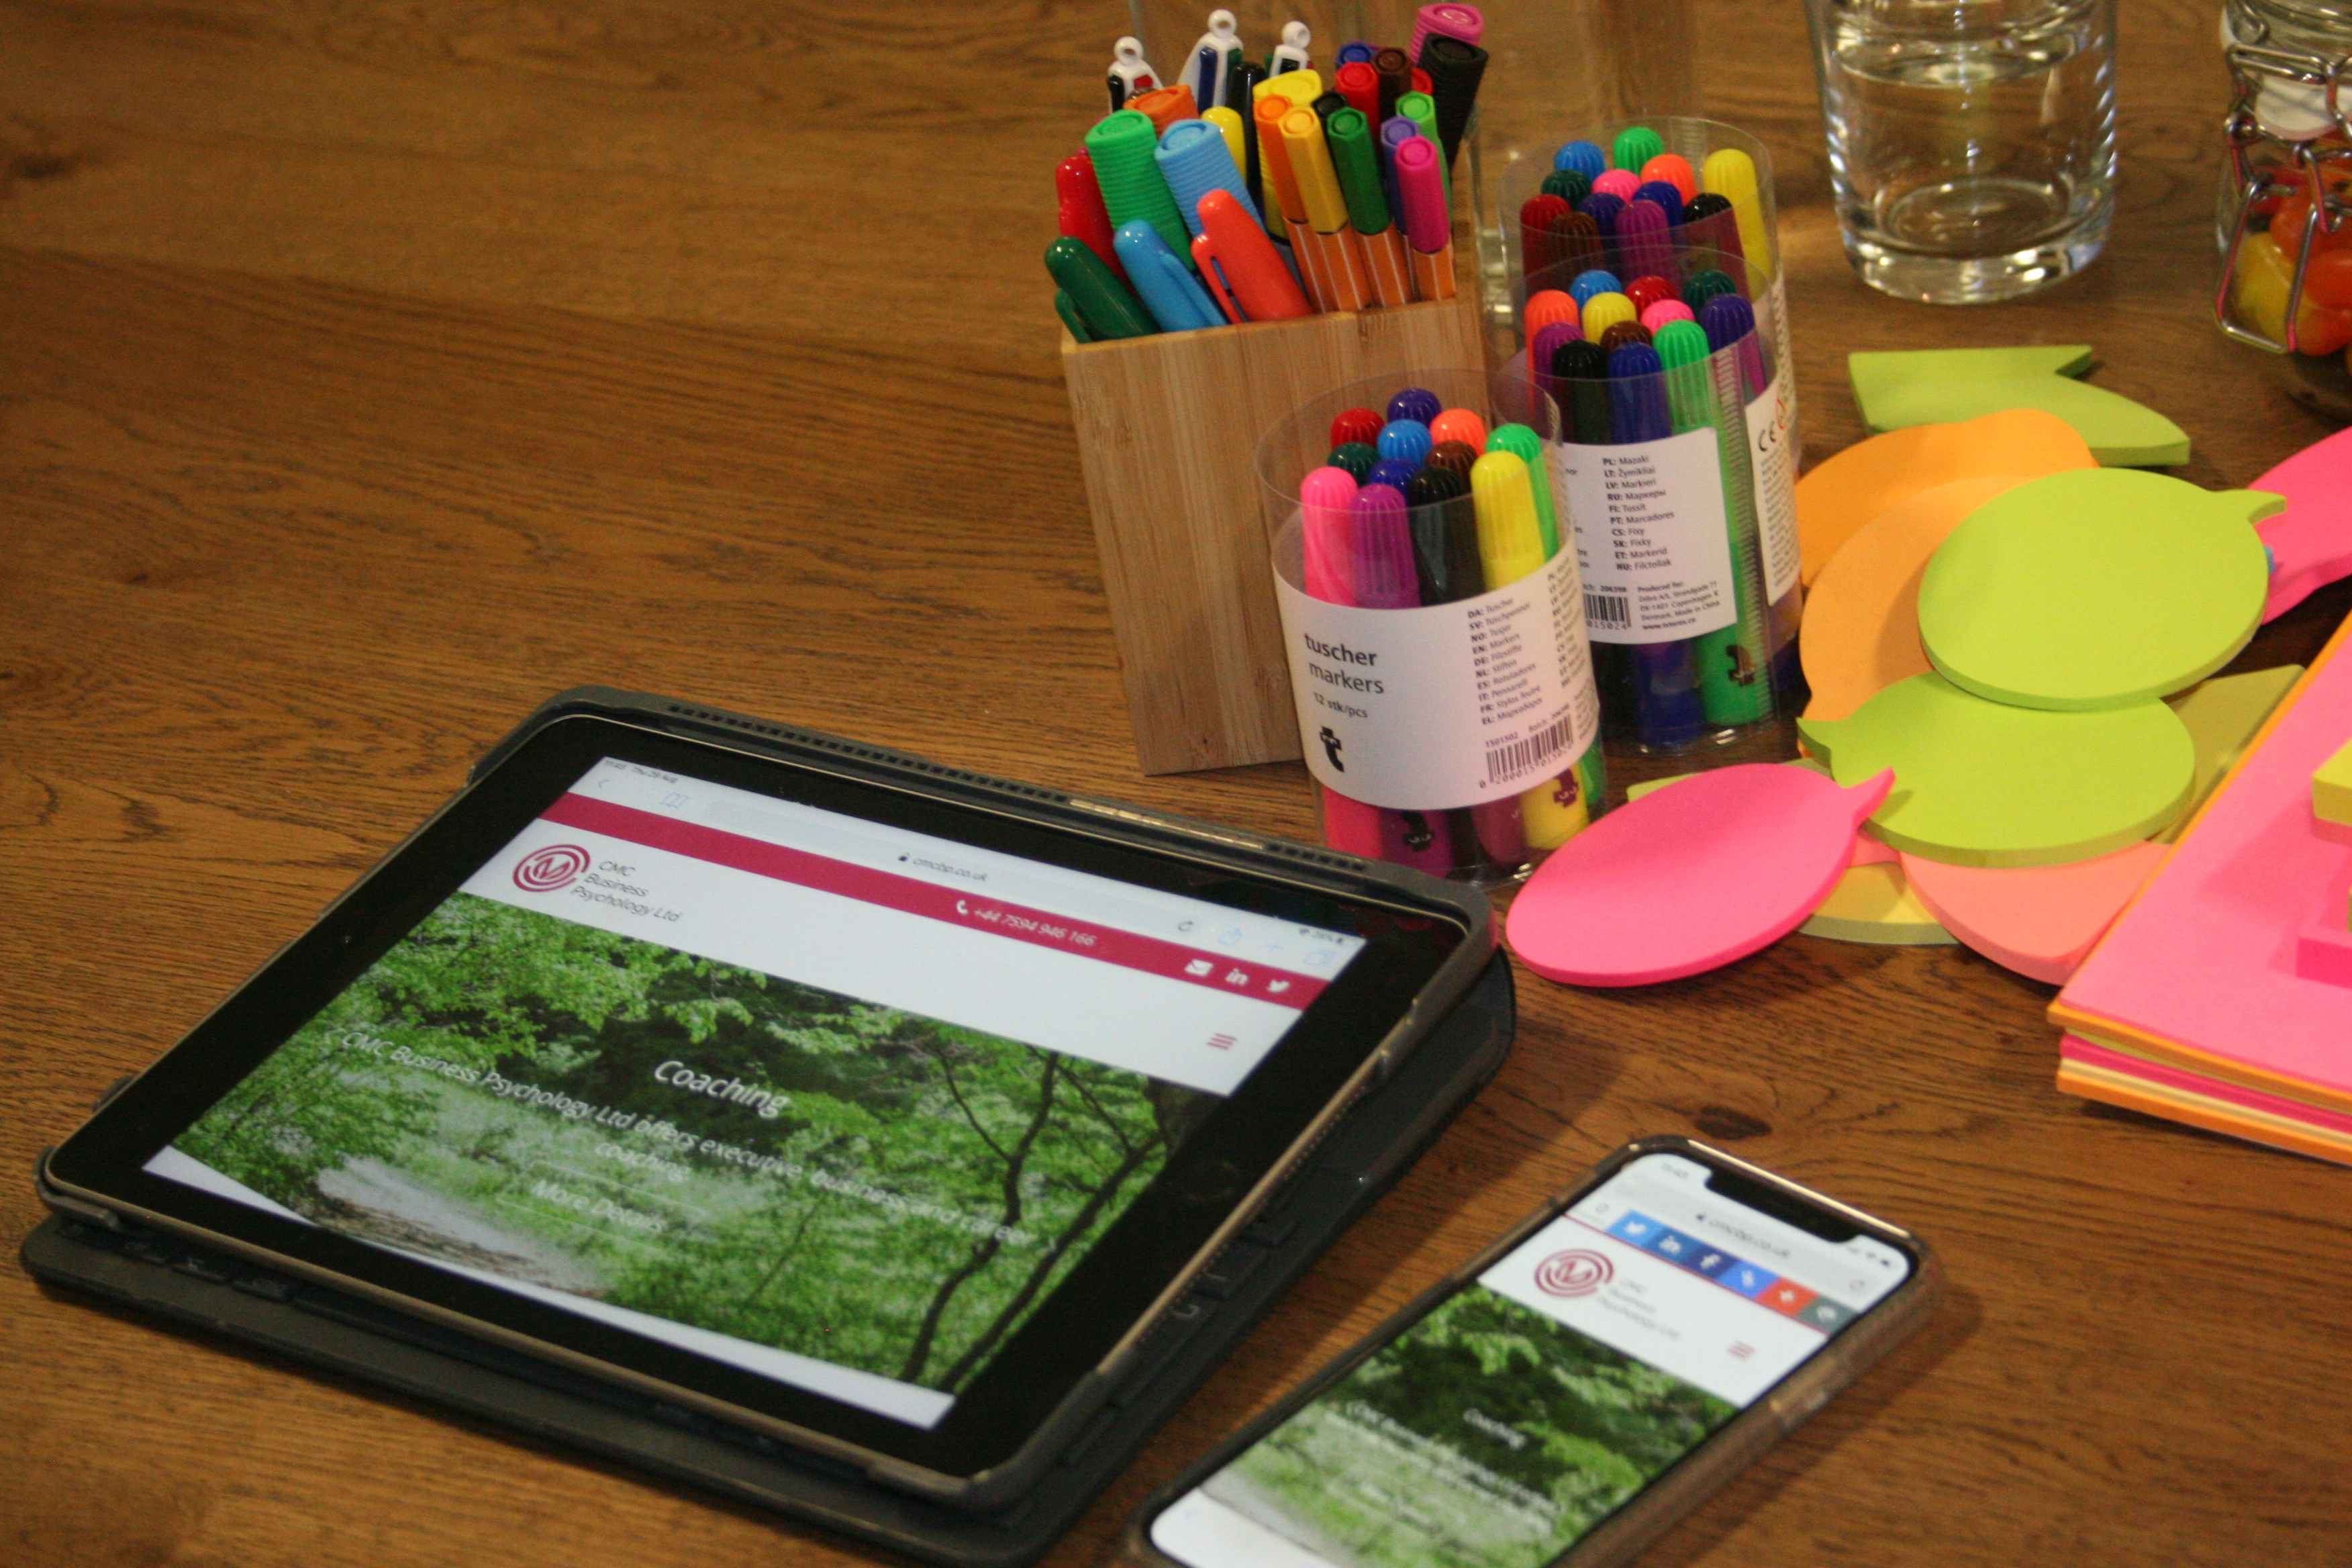 blended learning tablet and workshop materials